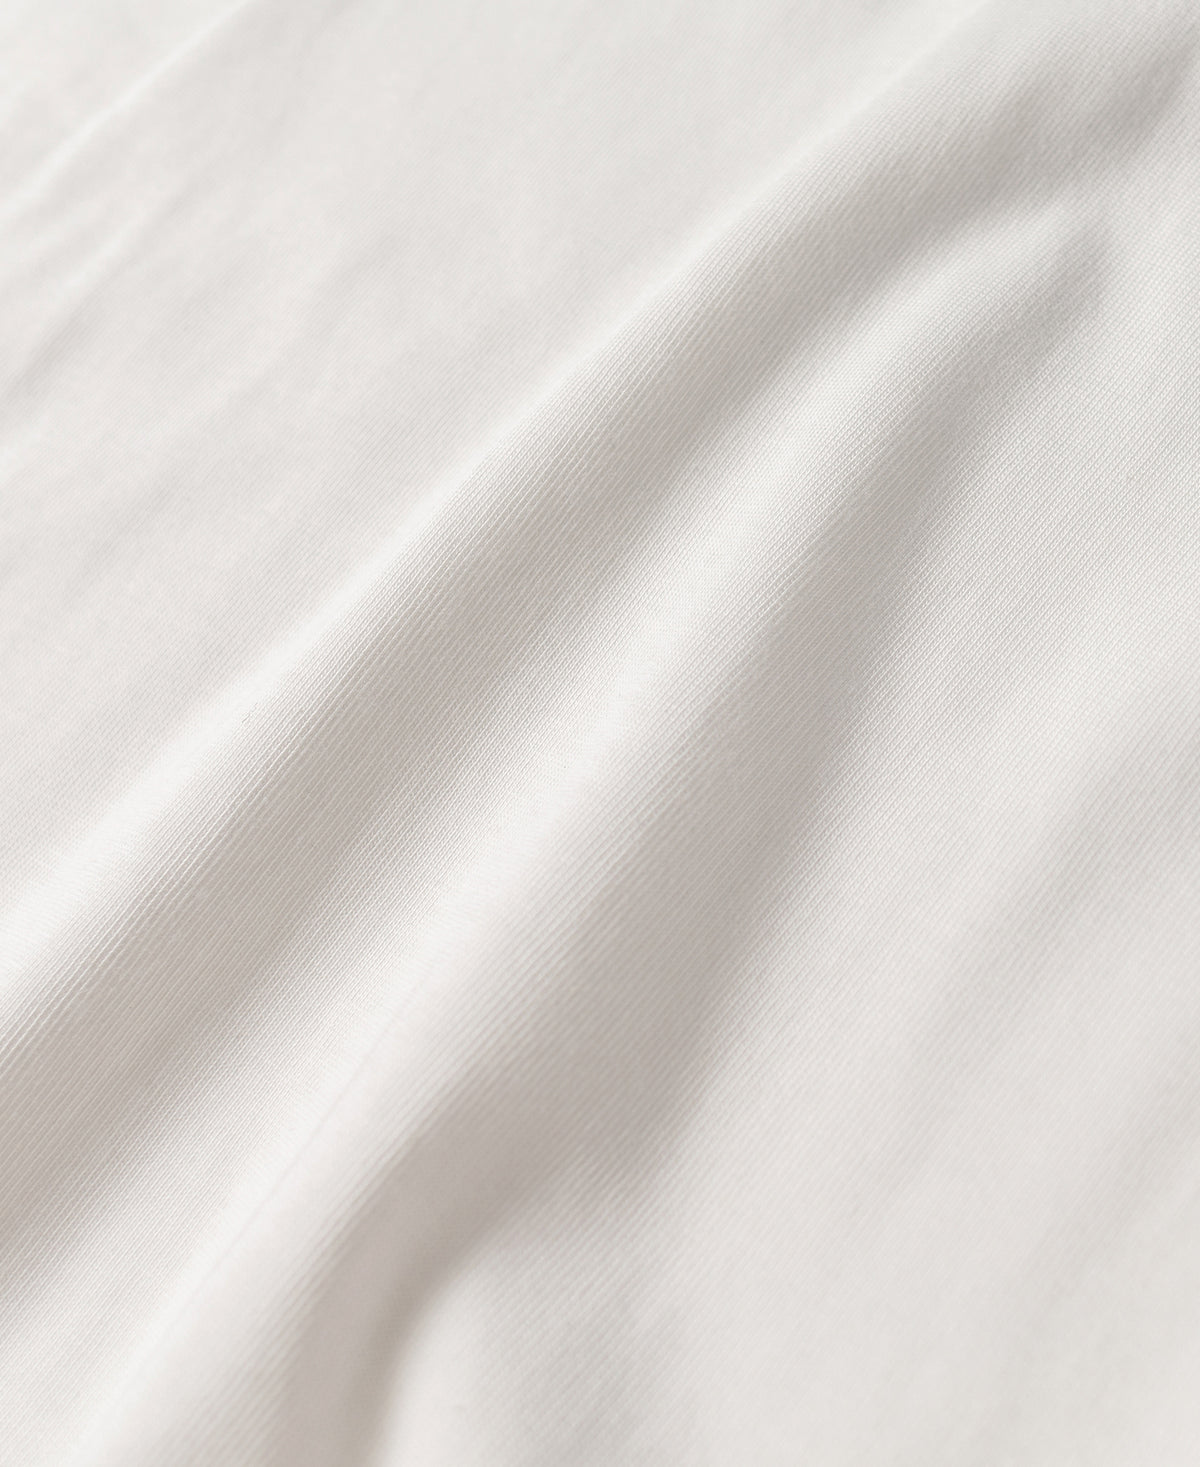 10.6 oz Cotton Short Sleeve Henley T-Shirt - White